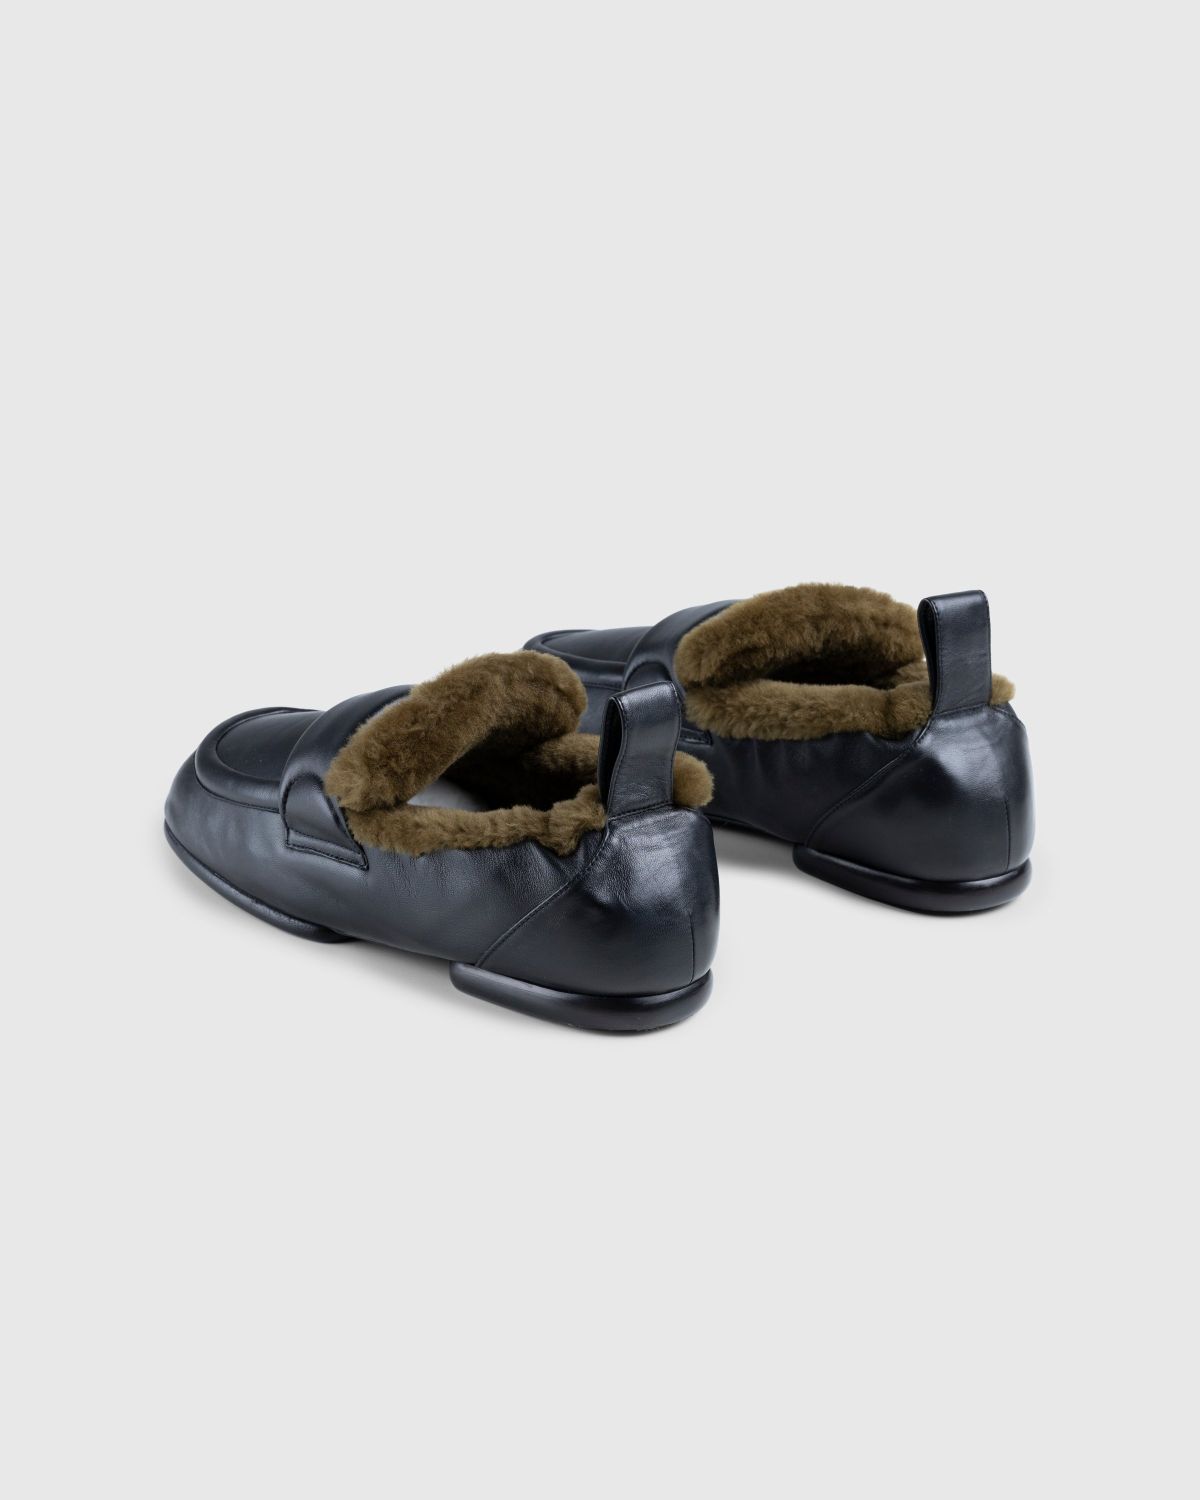 Dries van Noten – Padded Faux Fur Loafers Black - Sandals - Black - Image 4